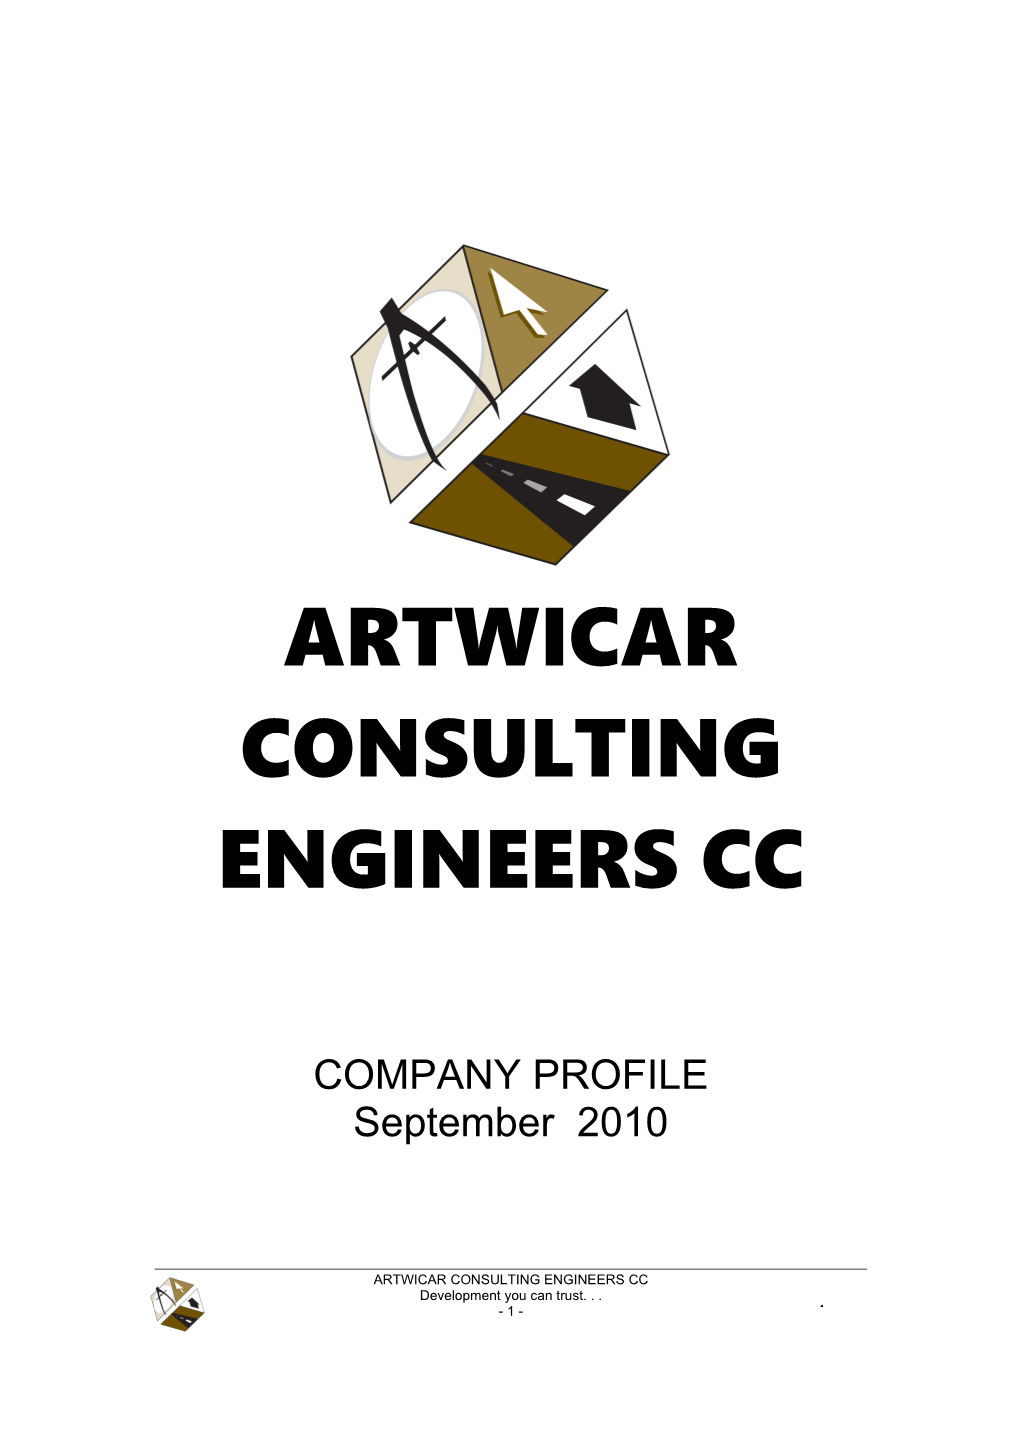 Artwicar Consulting Engineers Cc